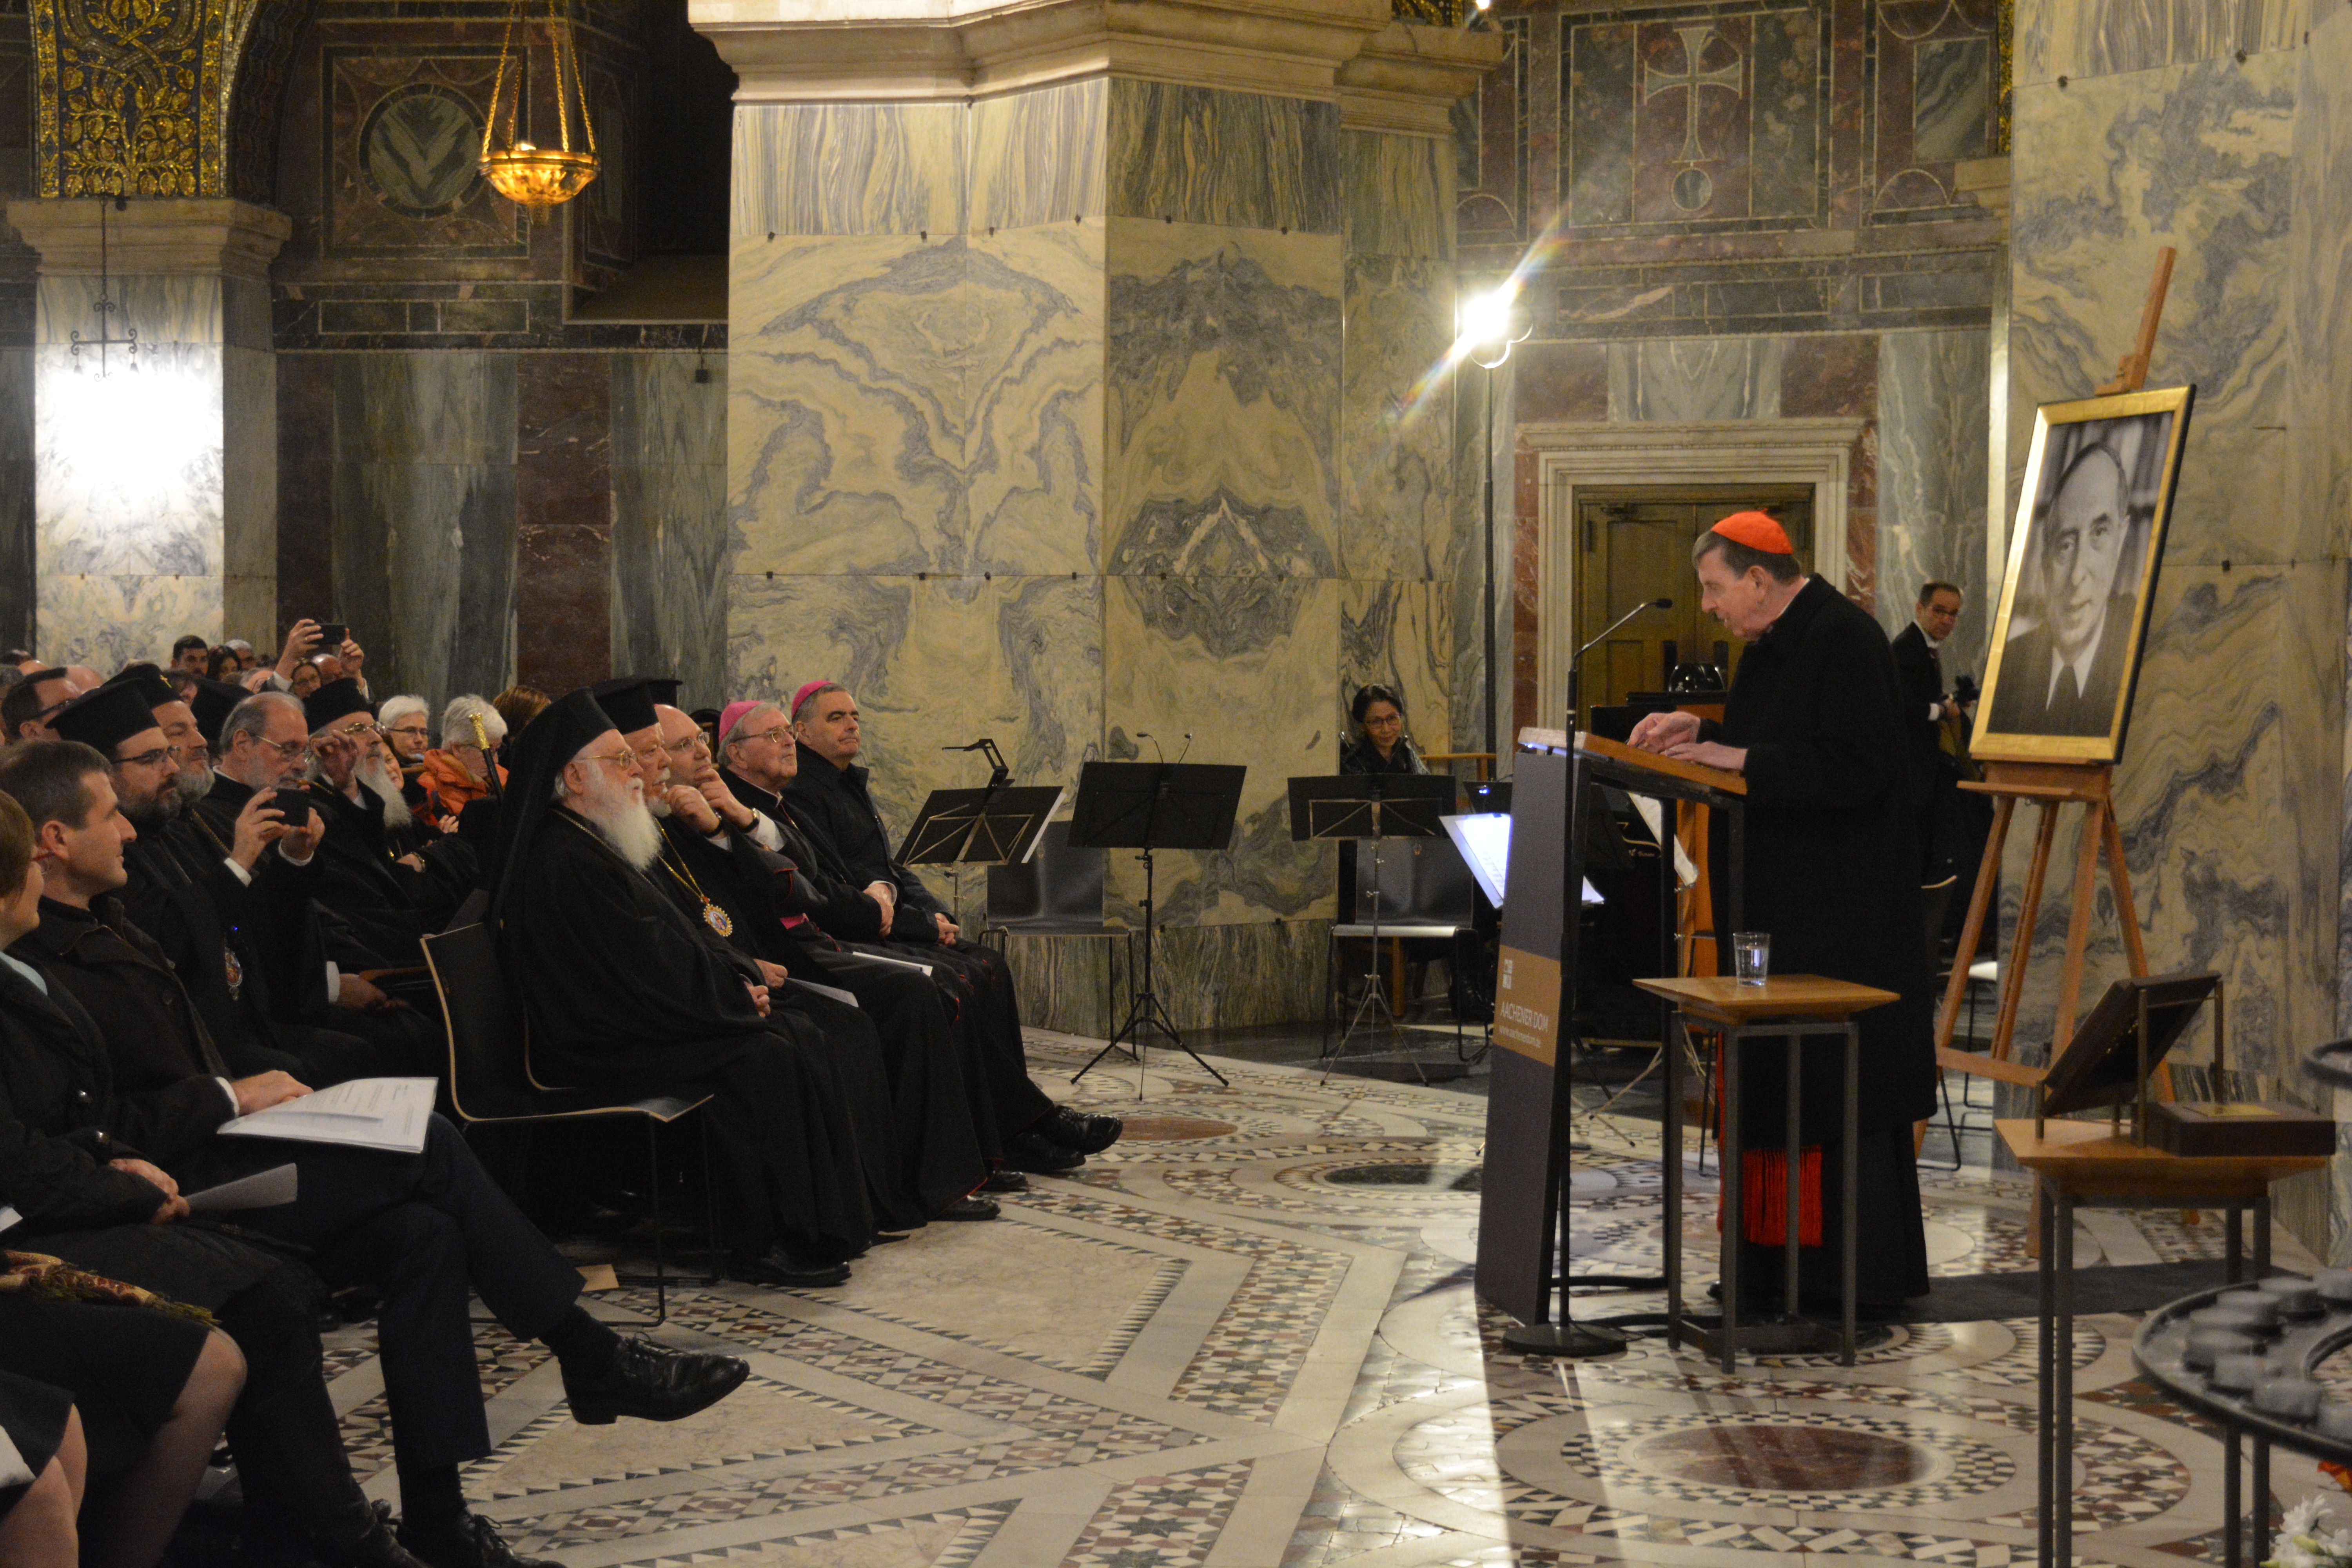 Laudatory speech by Cardinal Kurt Koch